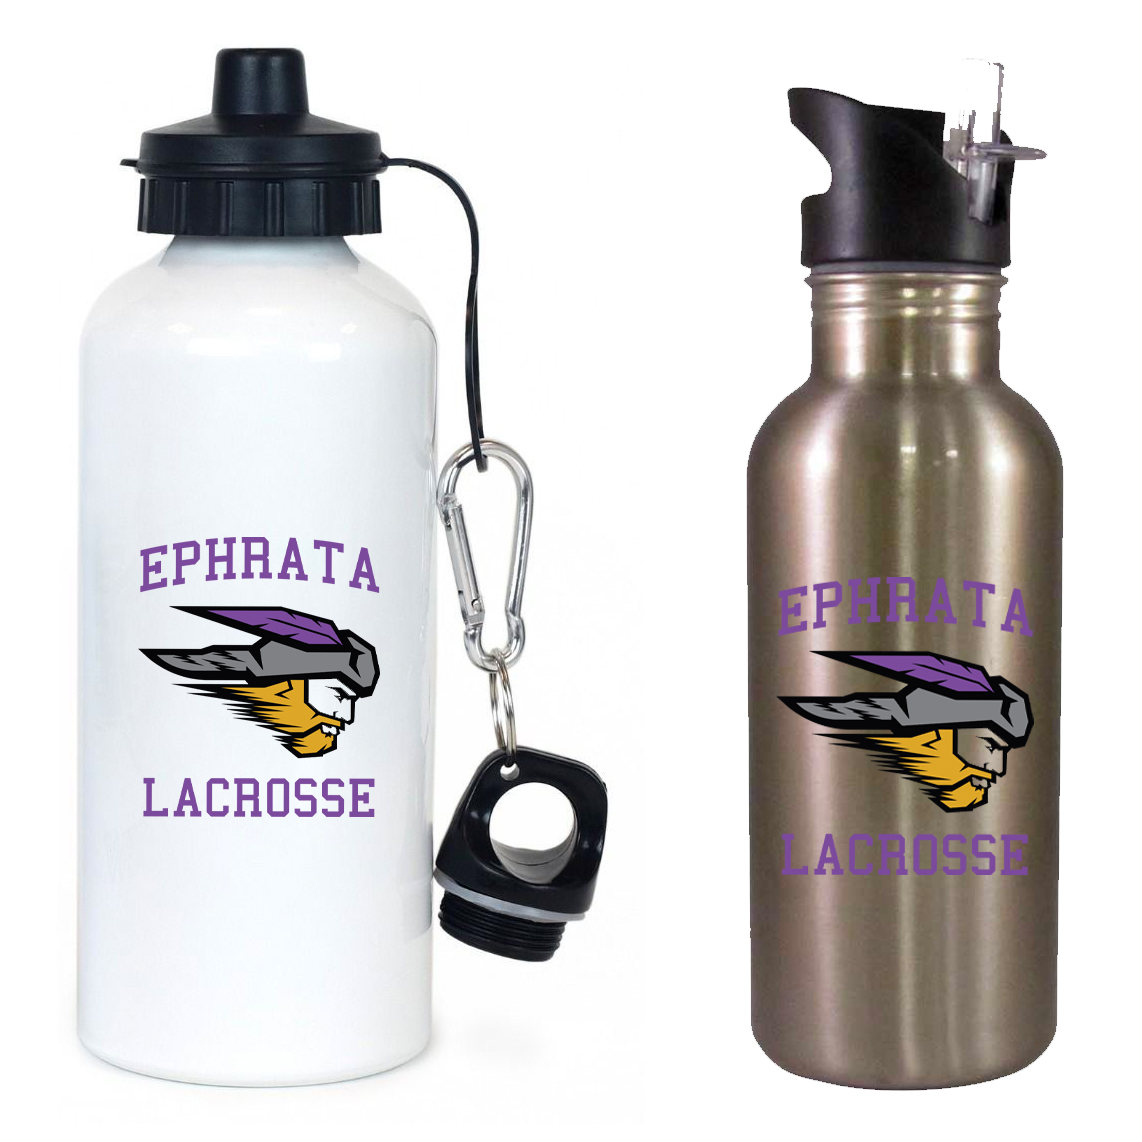 Ephrata Lacrosse Team Water Bottle